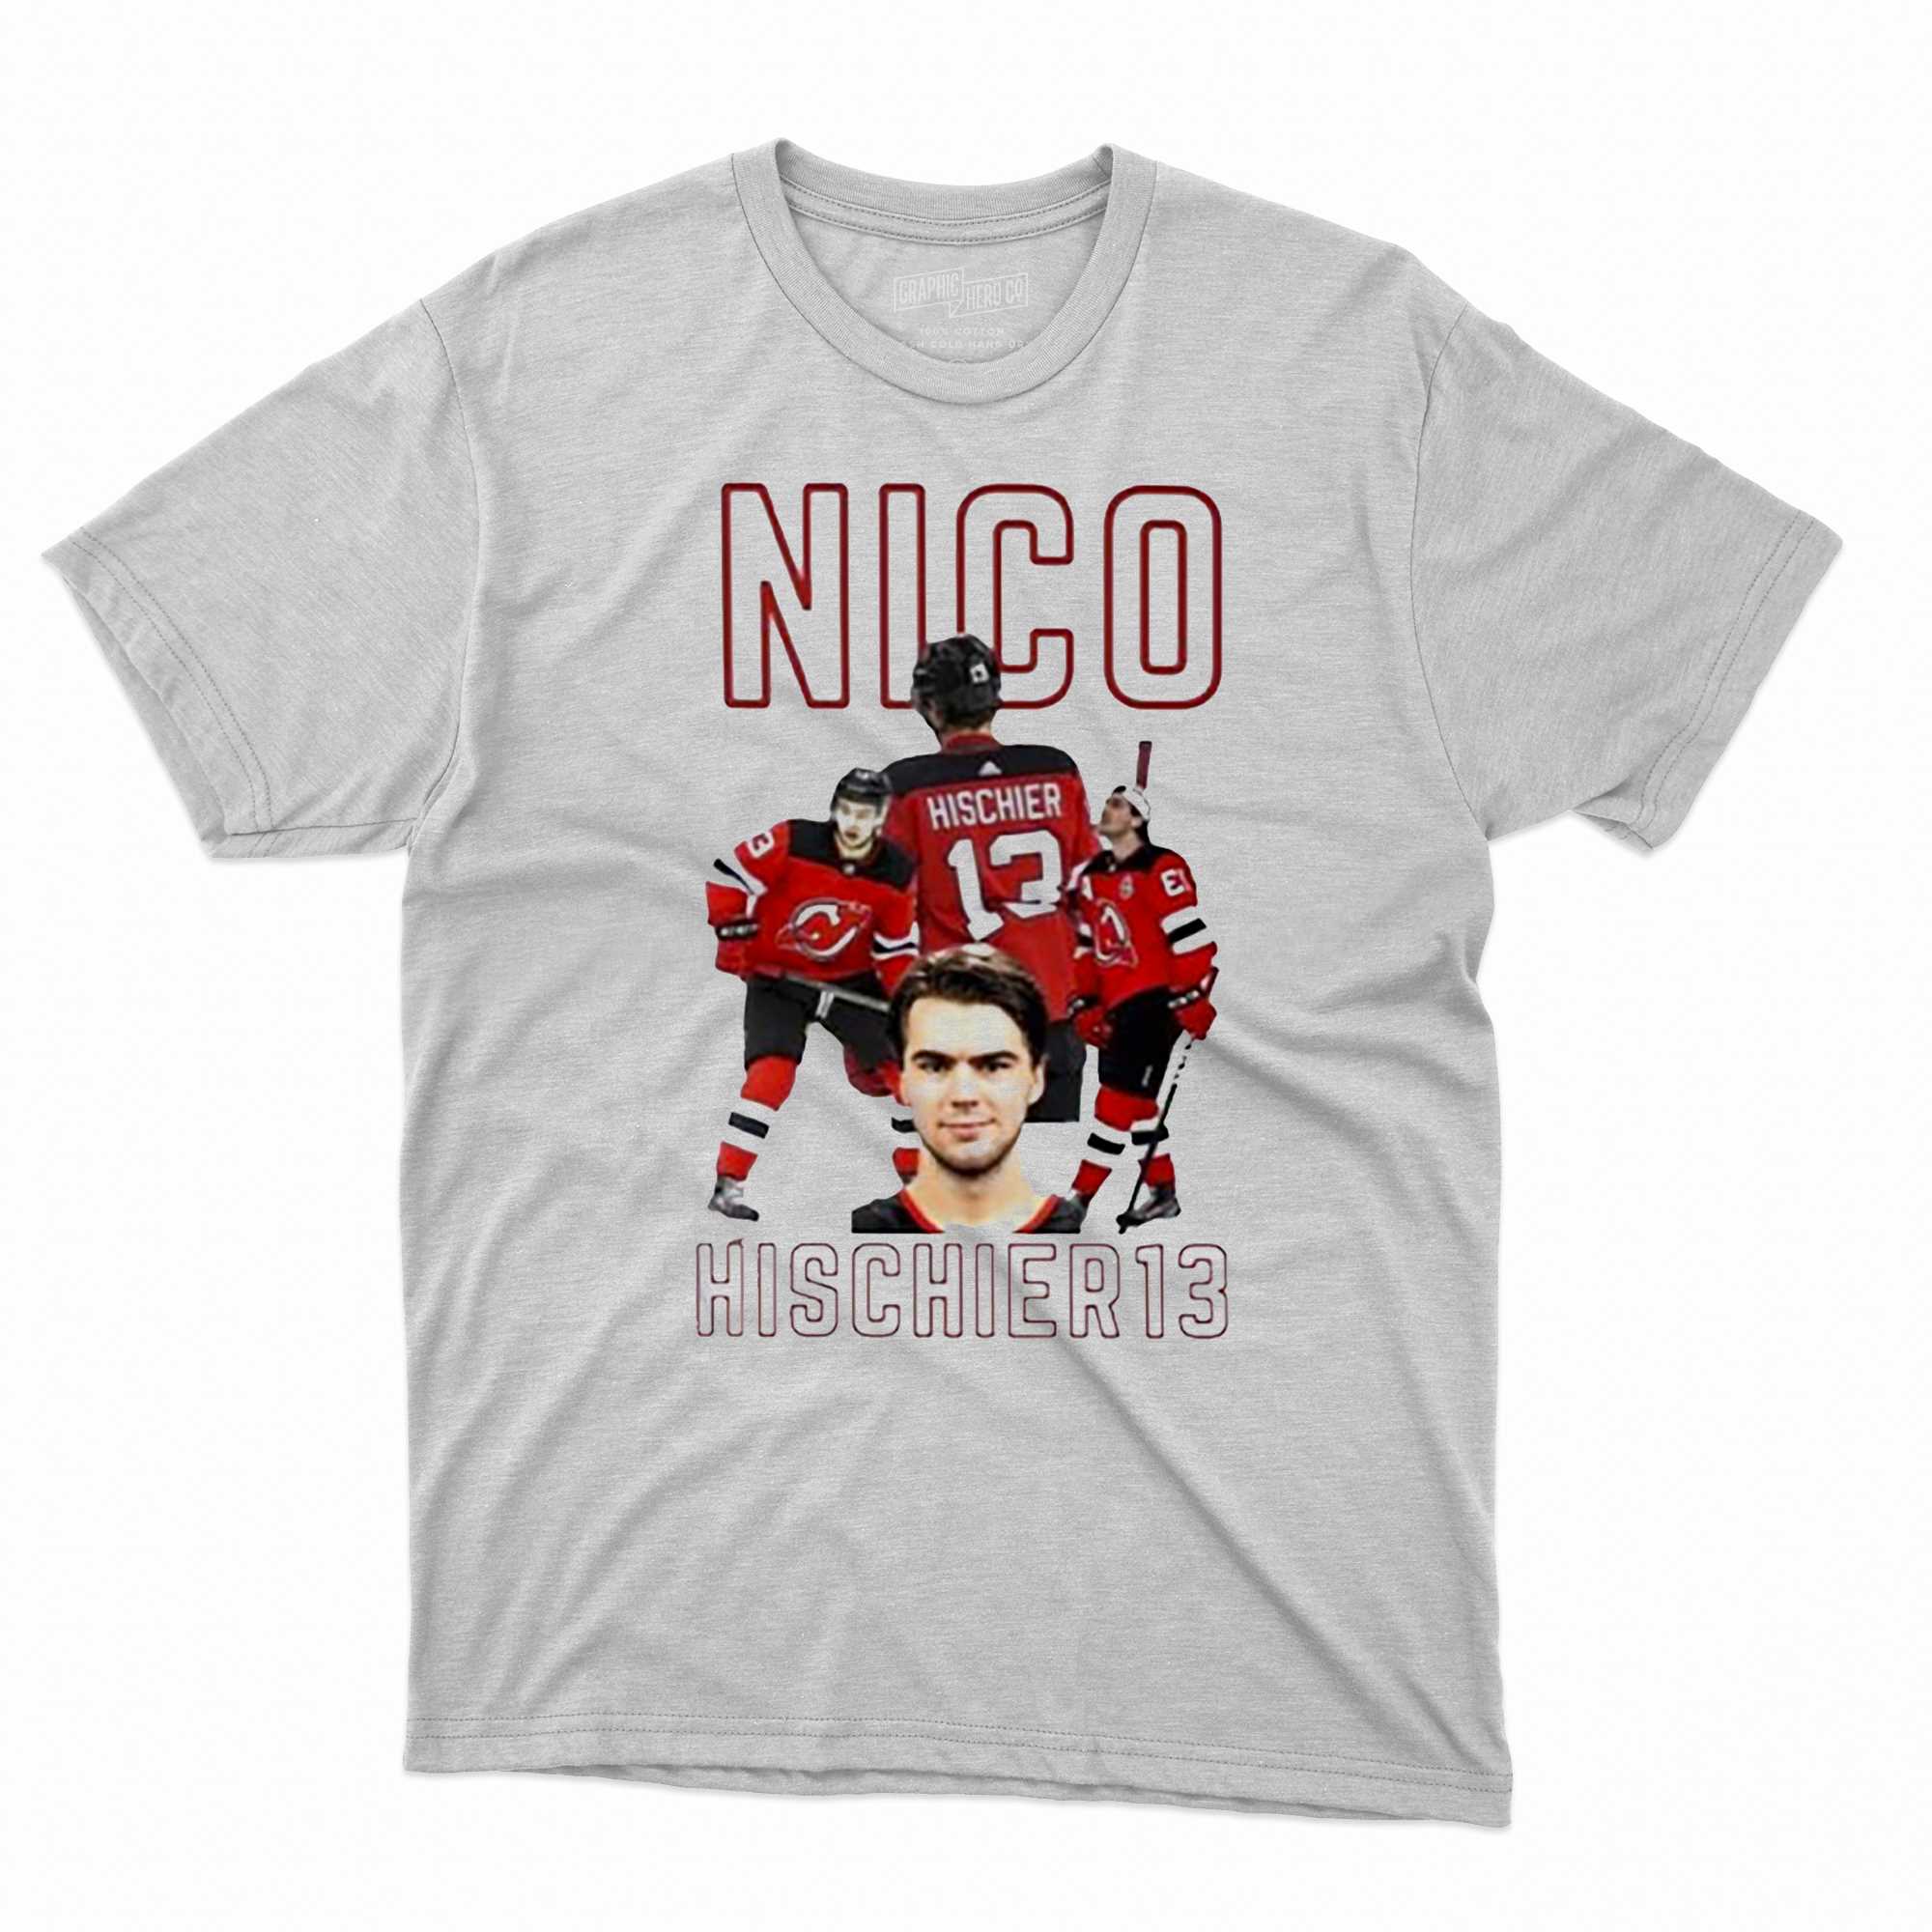 Stream Nico Hischier 13 Jersey Devil Ice Hockey Shirt by goduckoo